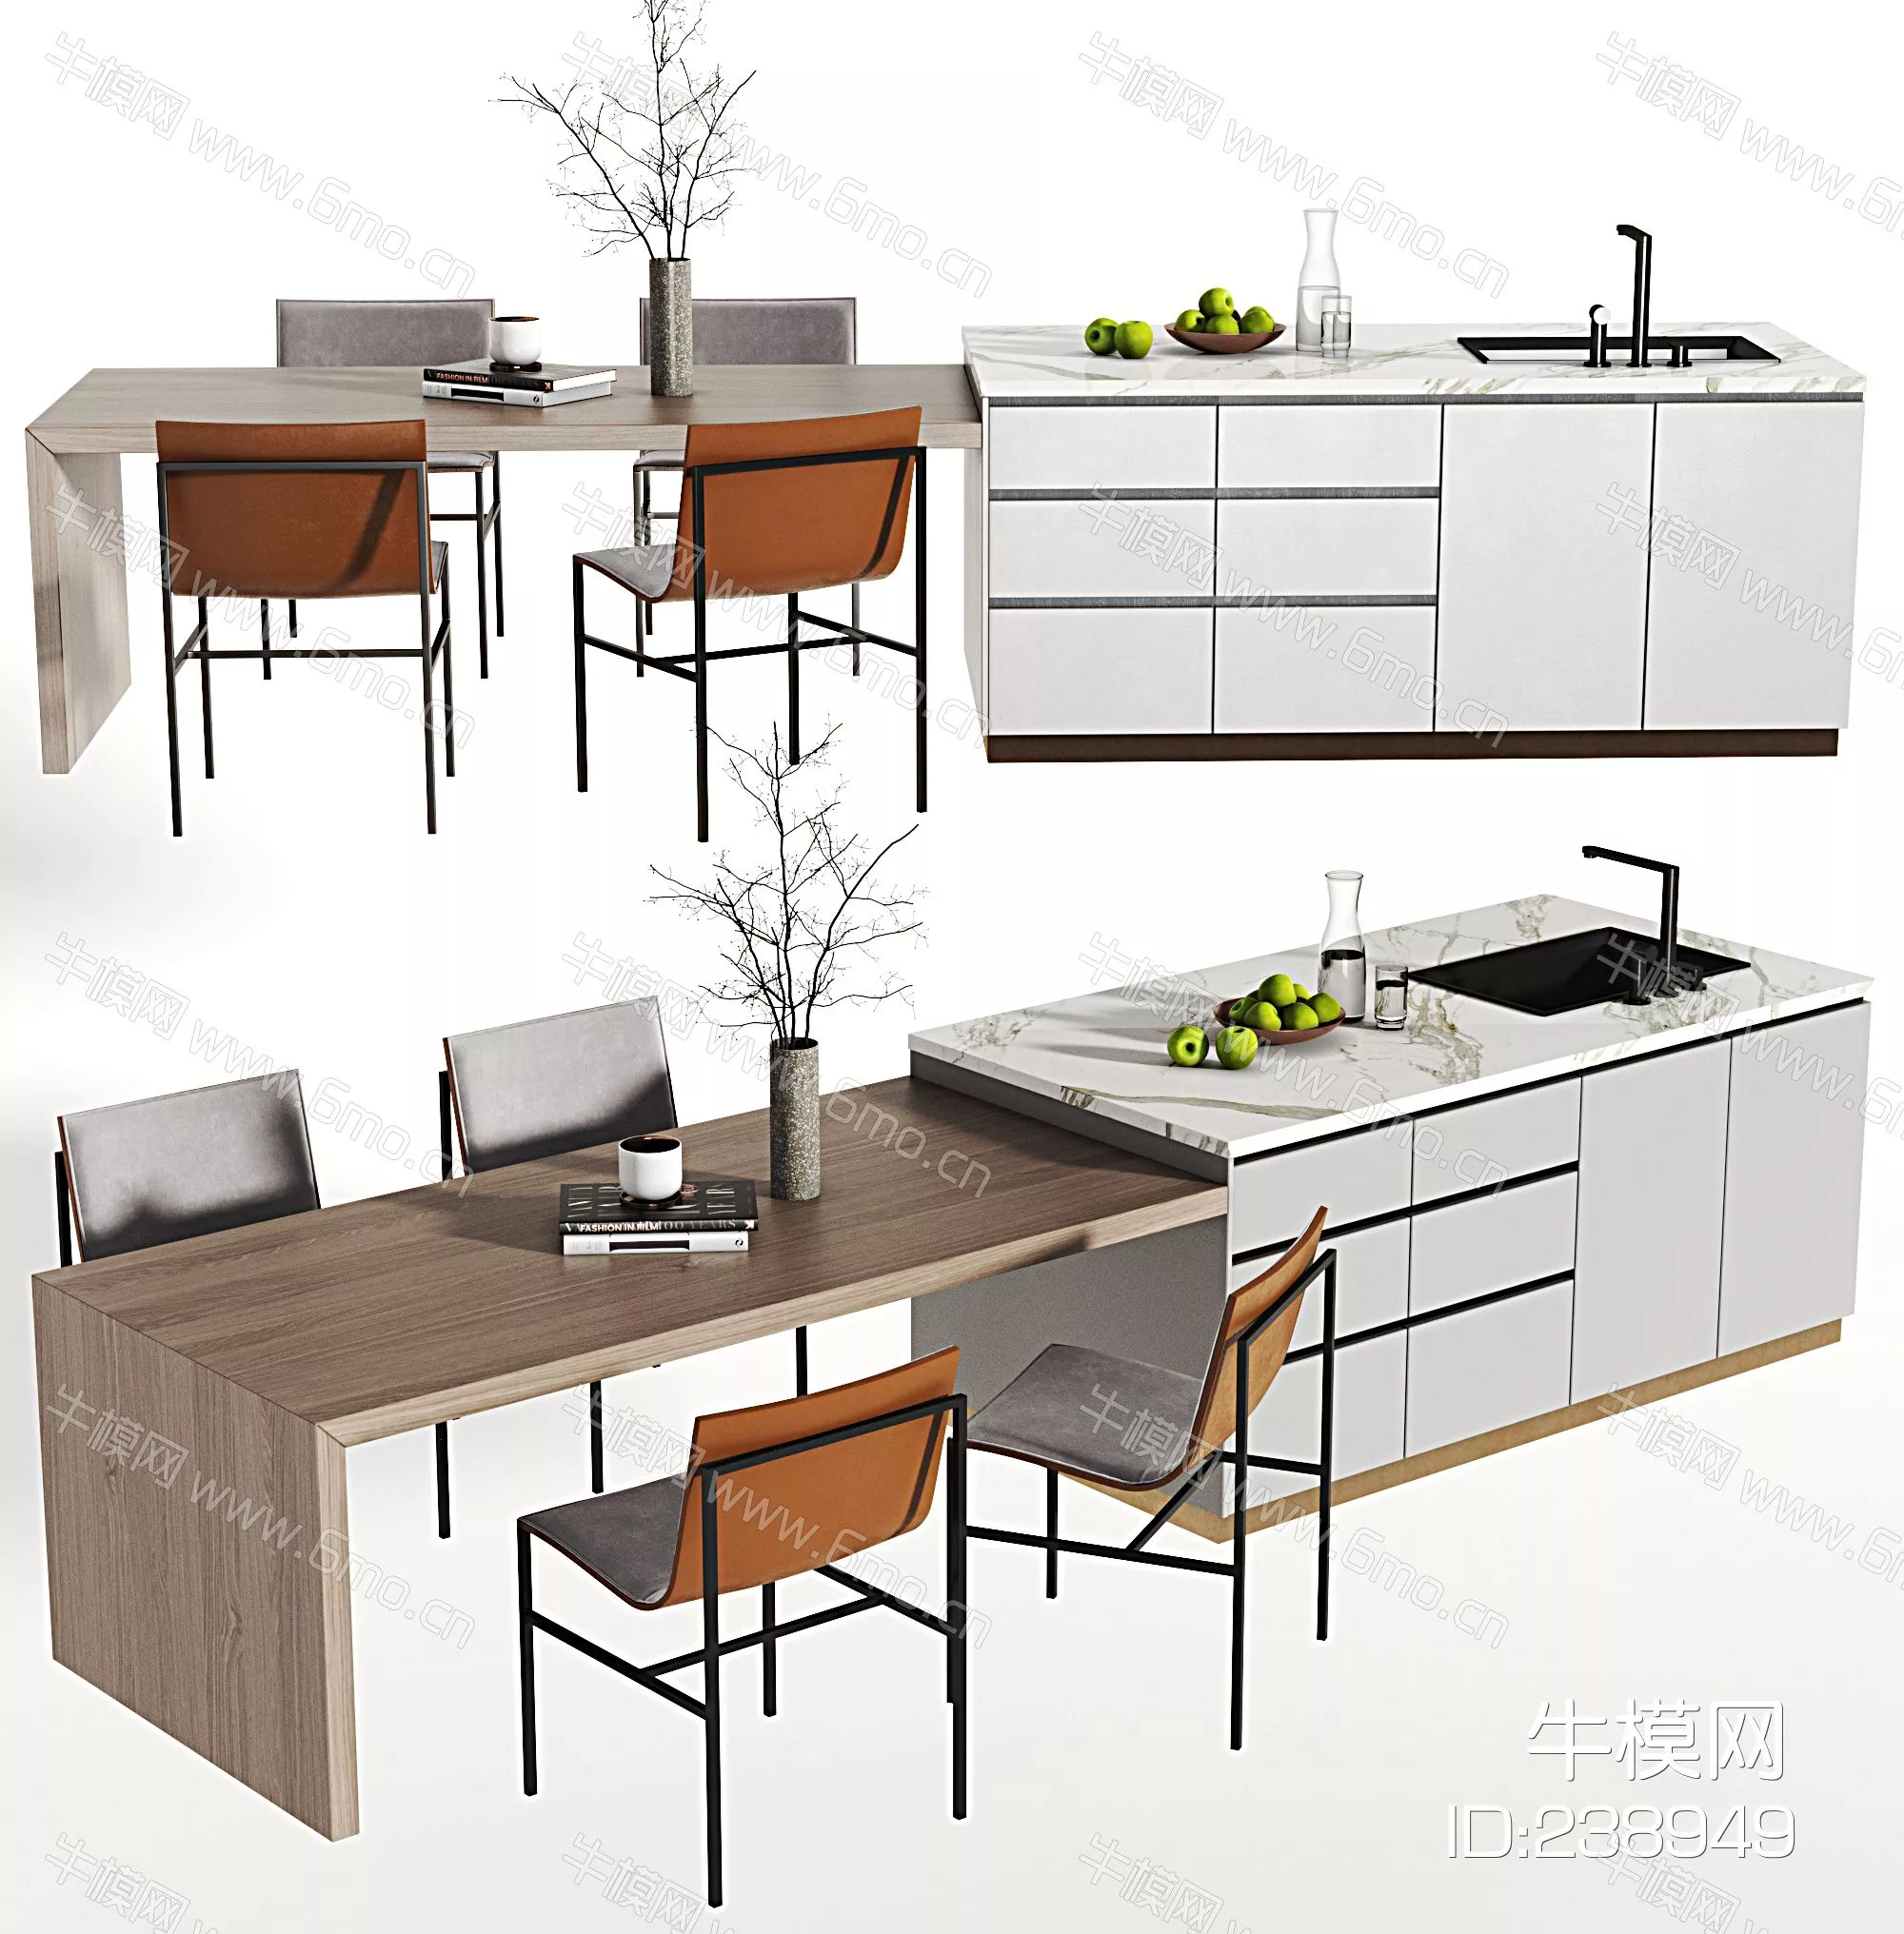 MODERN DINING TABLE SET - SKETCHUP 3D MODEL - VRAY - 238949